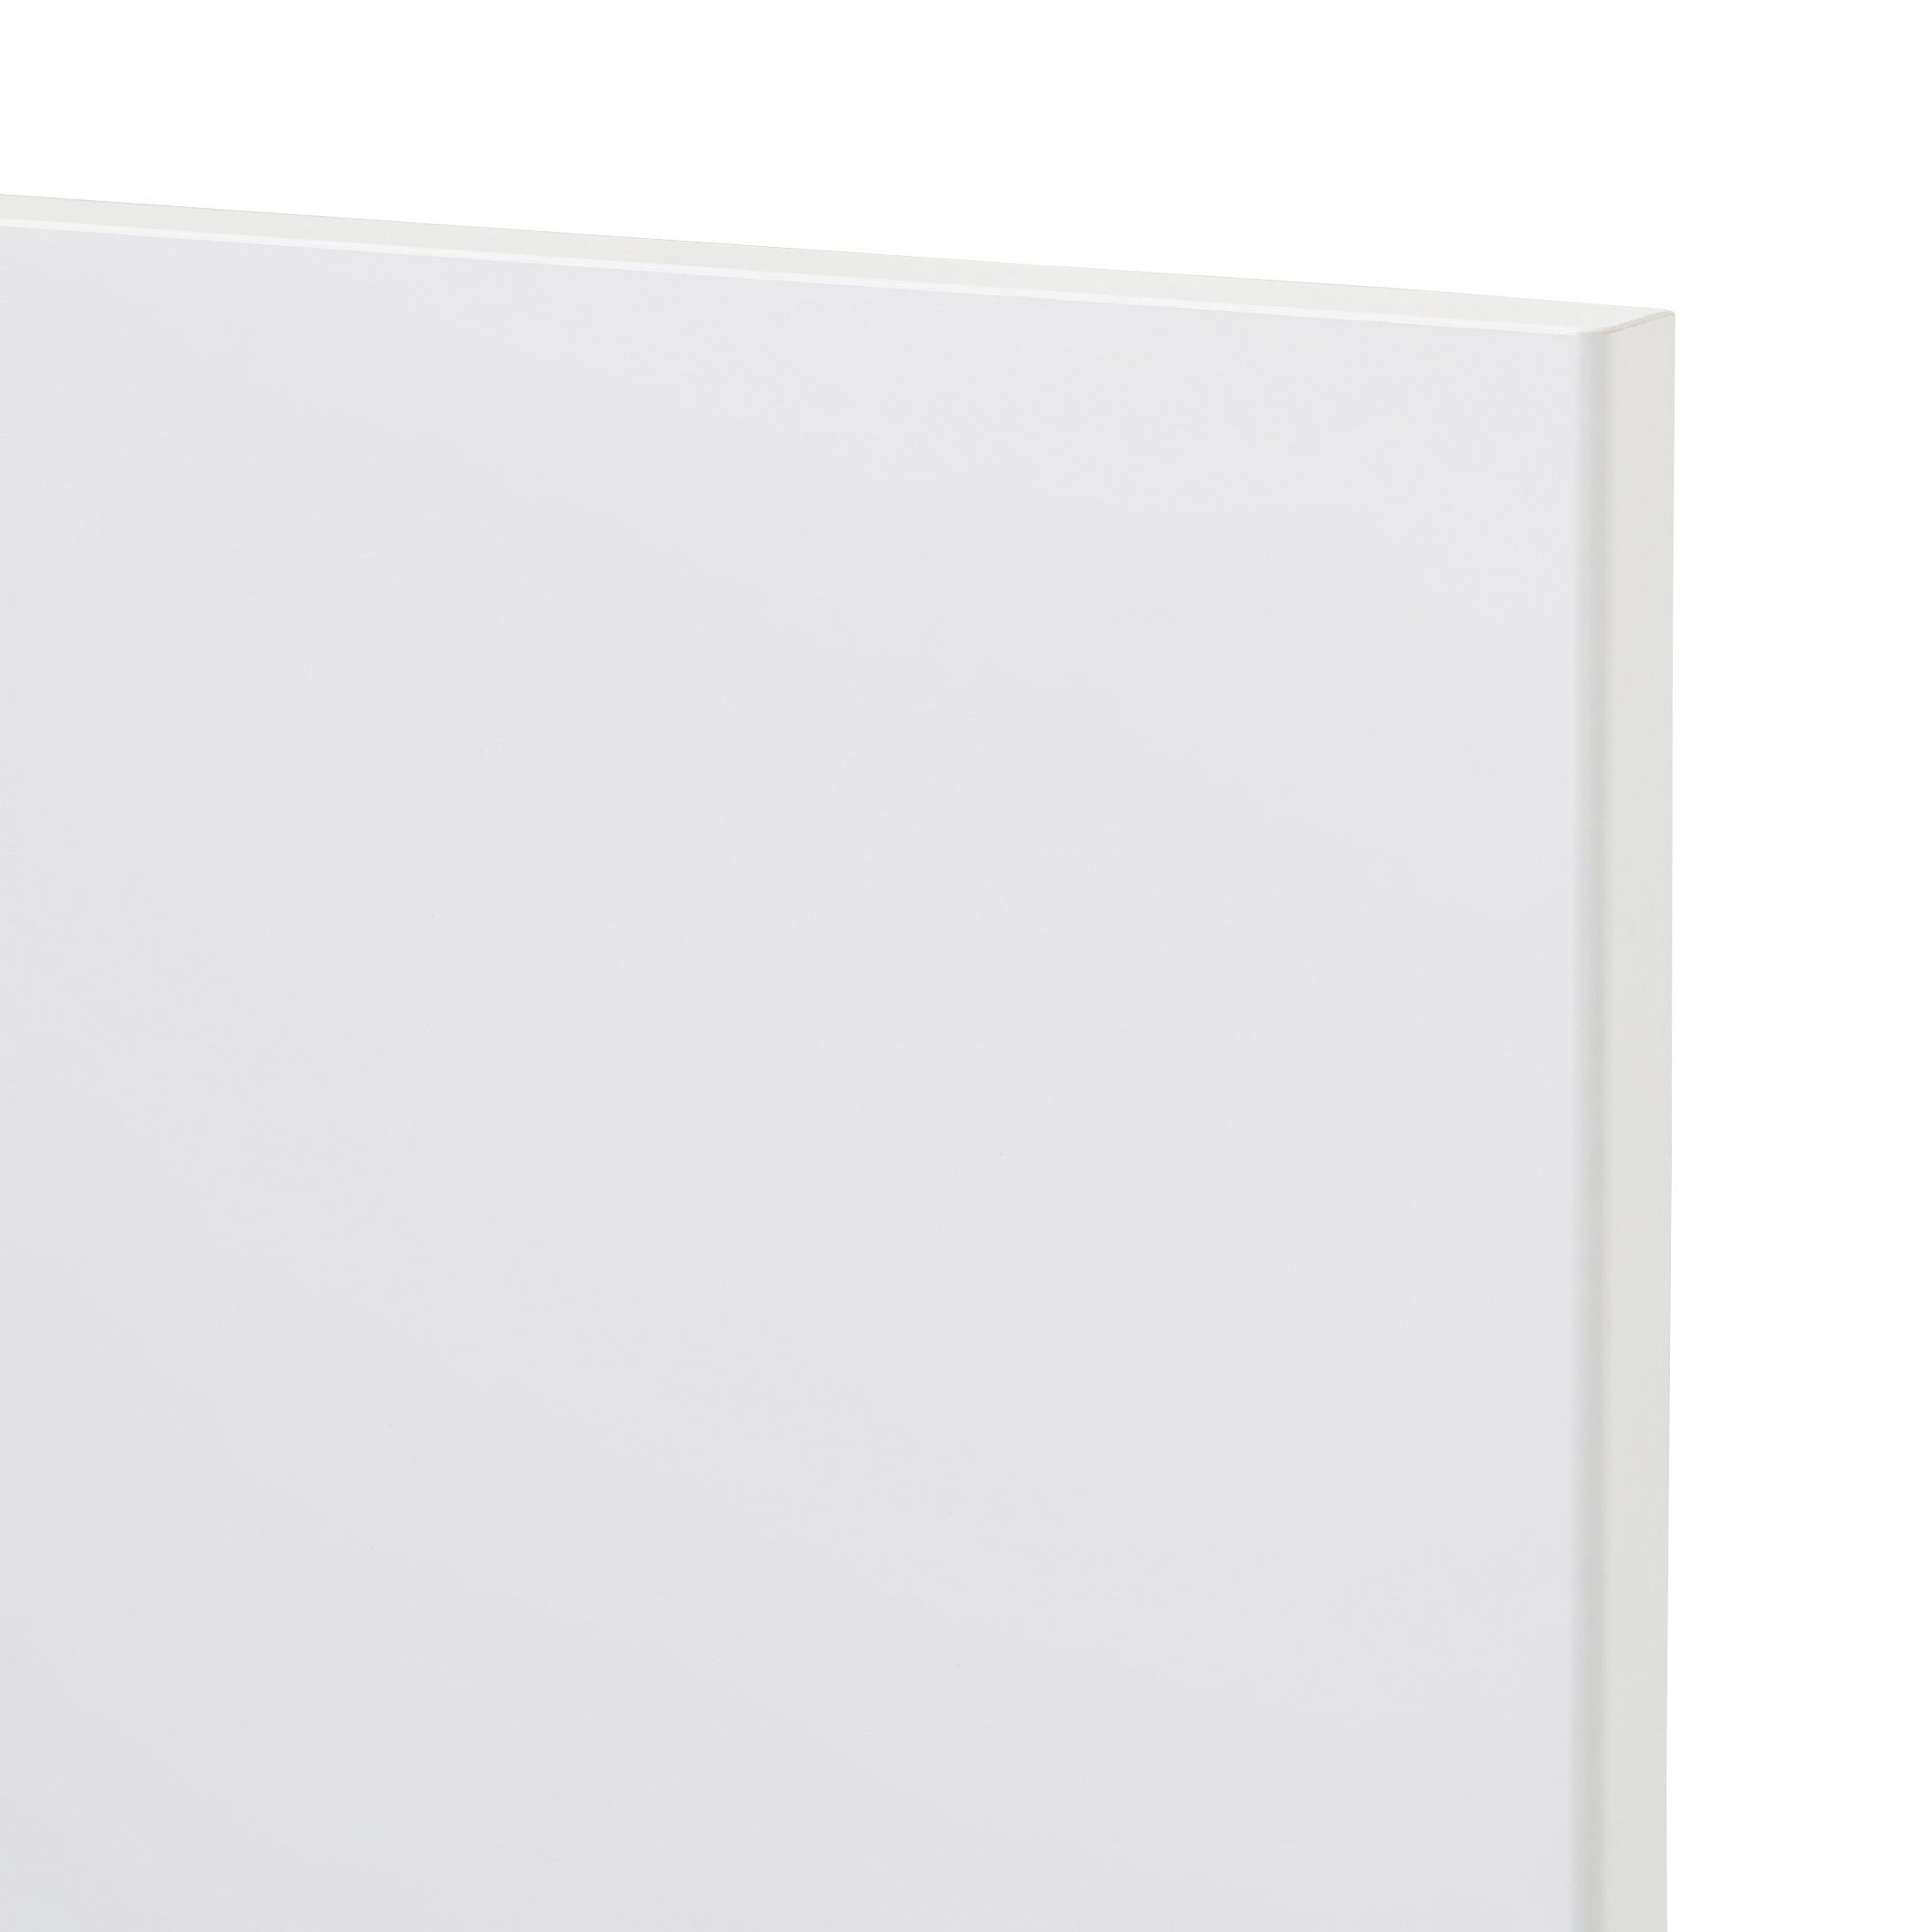 GoodHome Garcinia Gloss white integrated handle Bi-fold Cabinet door (W)800mm (H)356mm (T)19mm